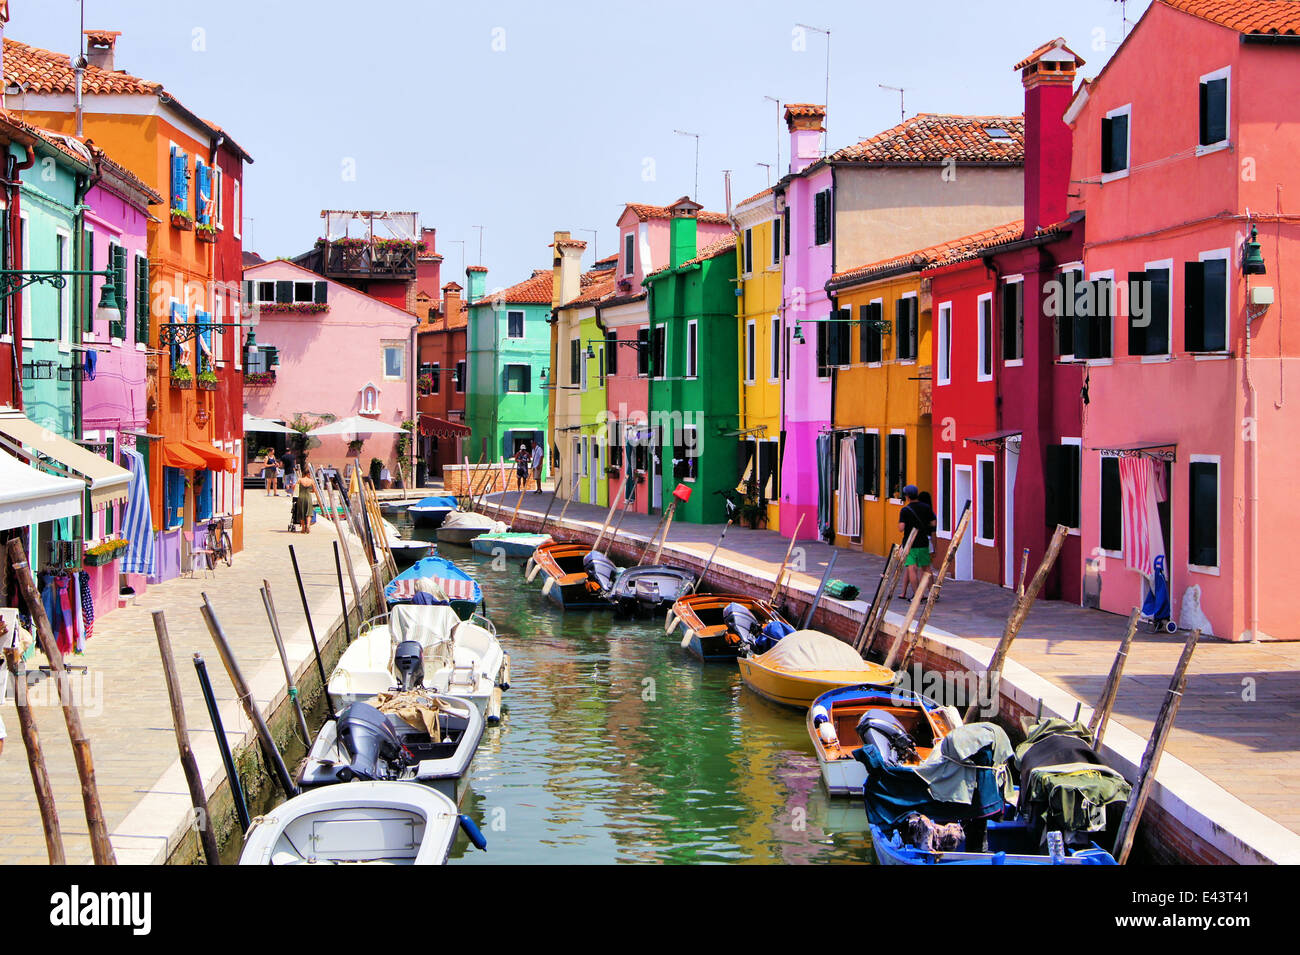 Colorful canal scene in Burano, Venice, Italy Stock Photo